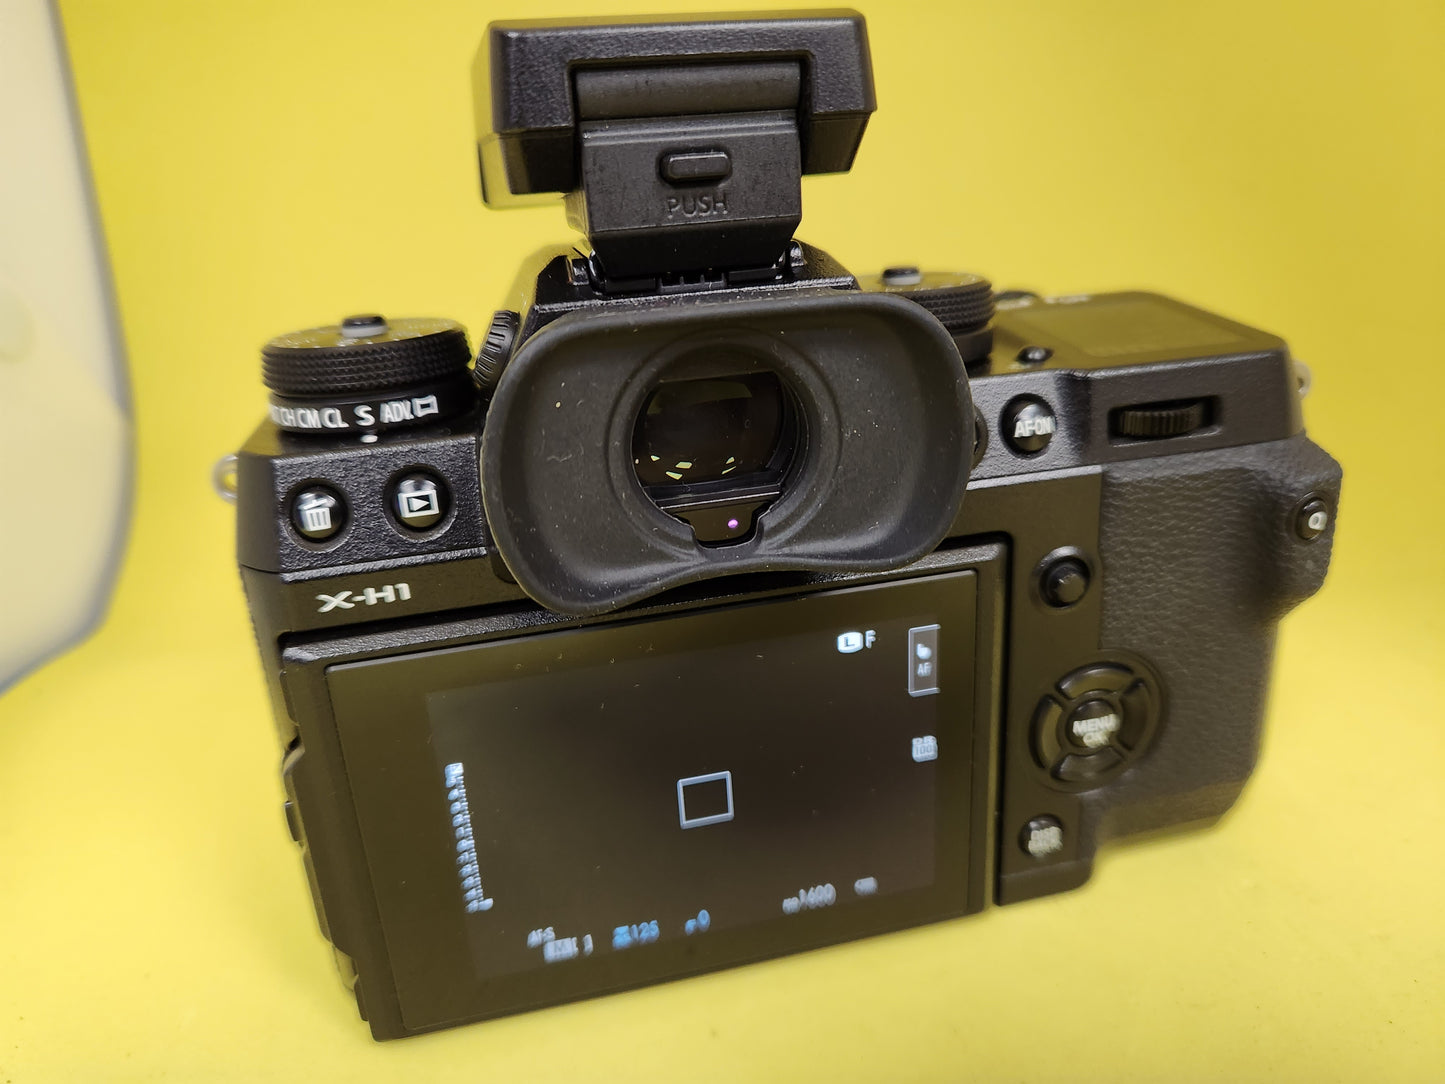 Fujifilm X-H1 body with flash light Fujifilm EF-X8 used